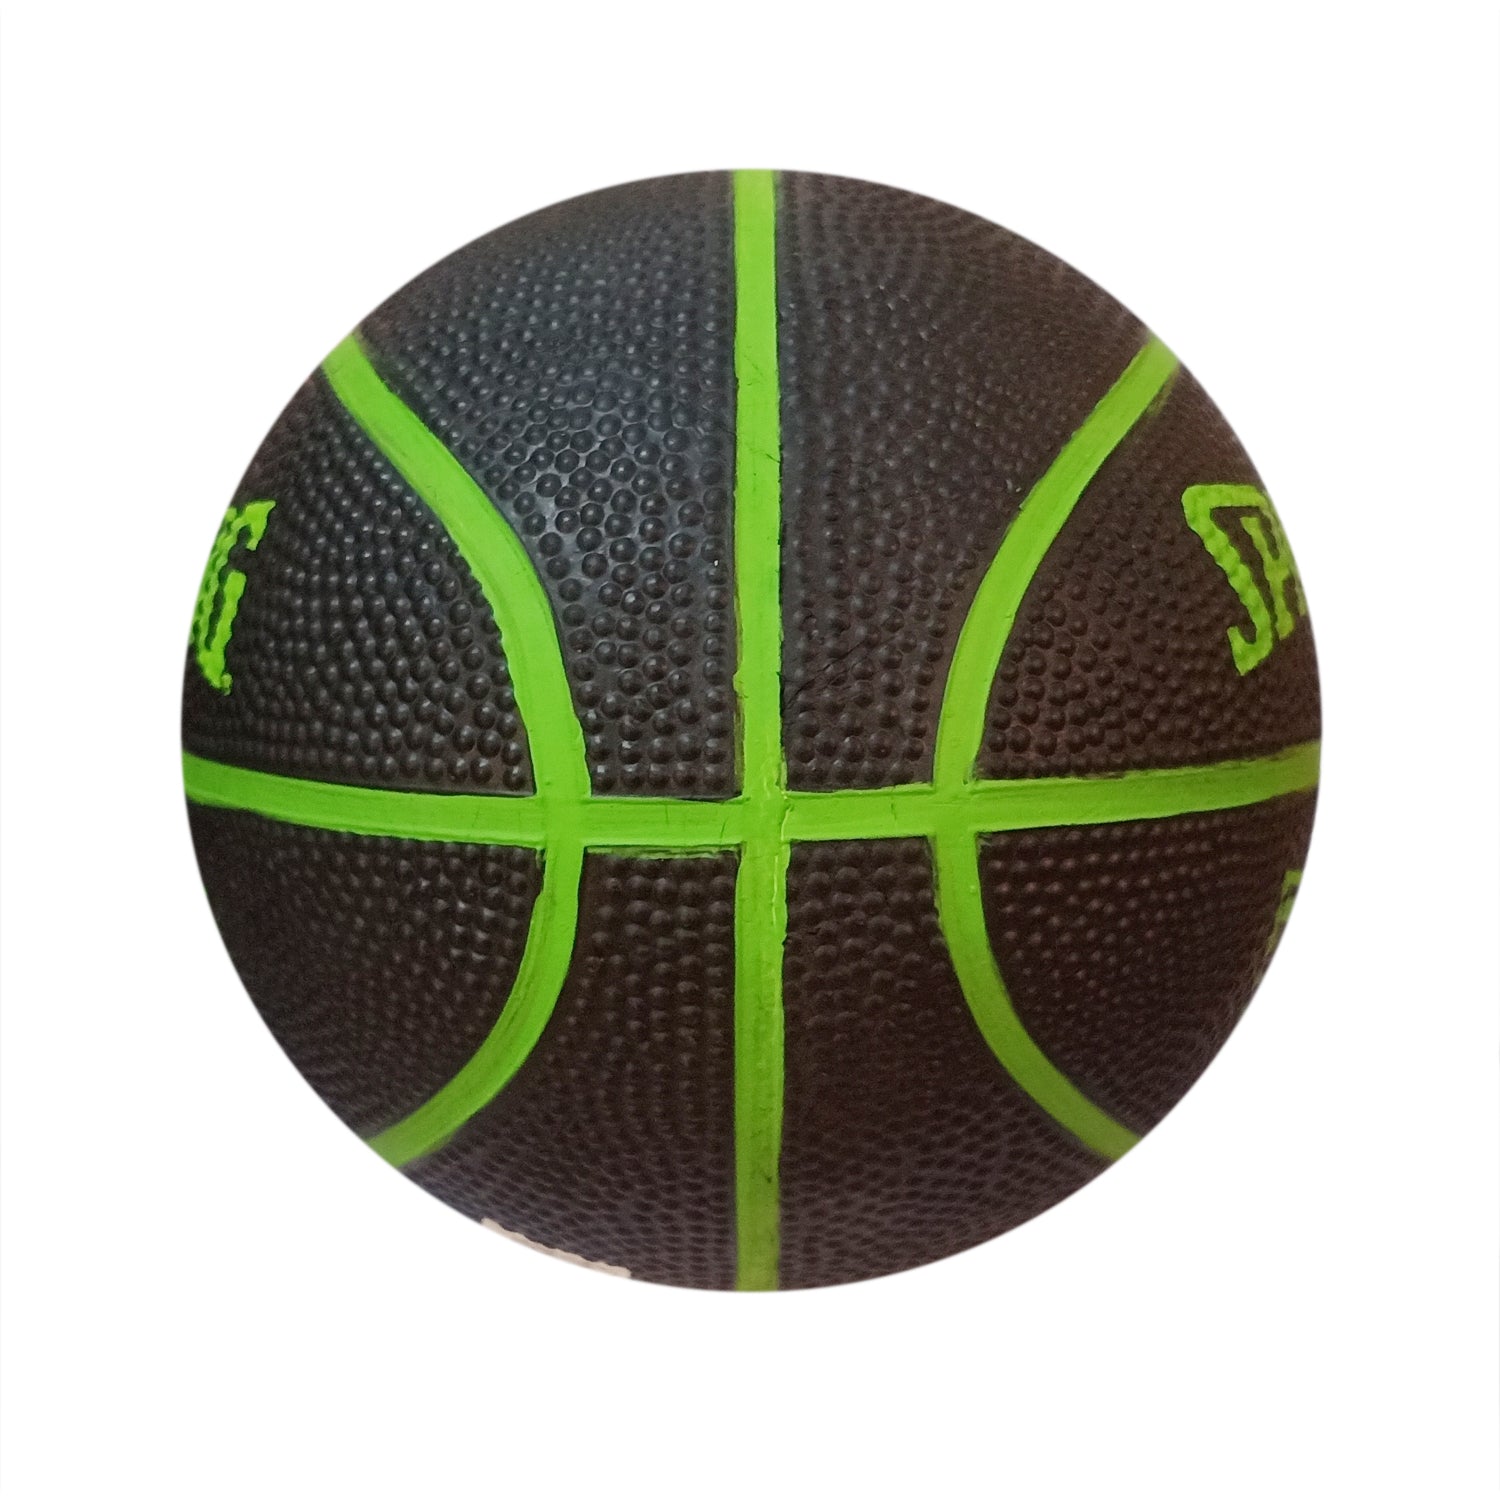 Spalding TF Basketball, Black/Green - Size 1 - Best Price online Prokicksports.com